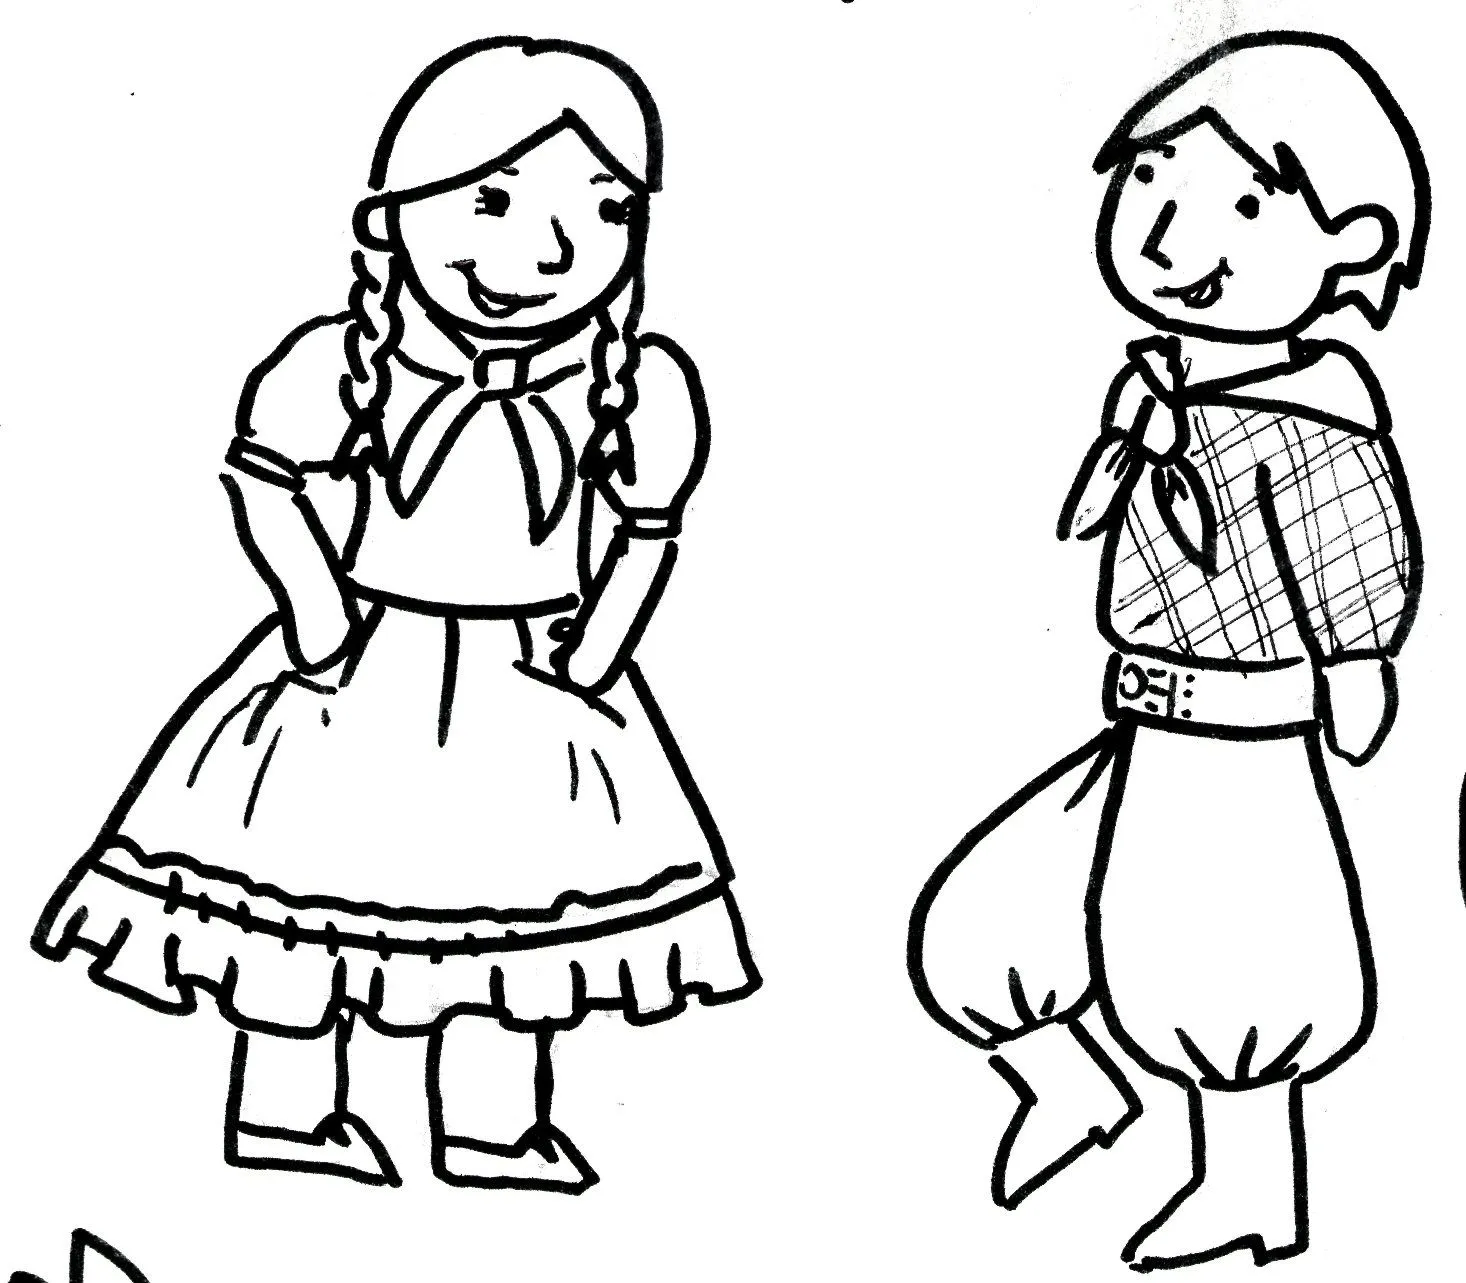 Danza folklórica en dibujos - Imagui